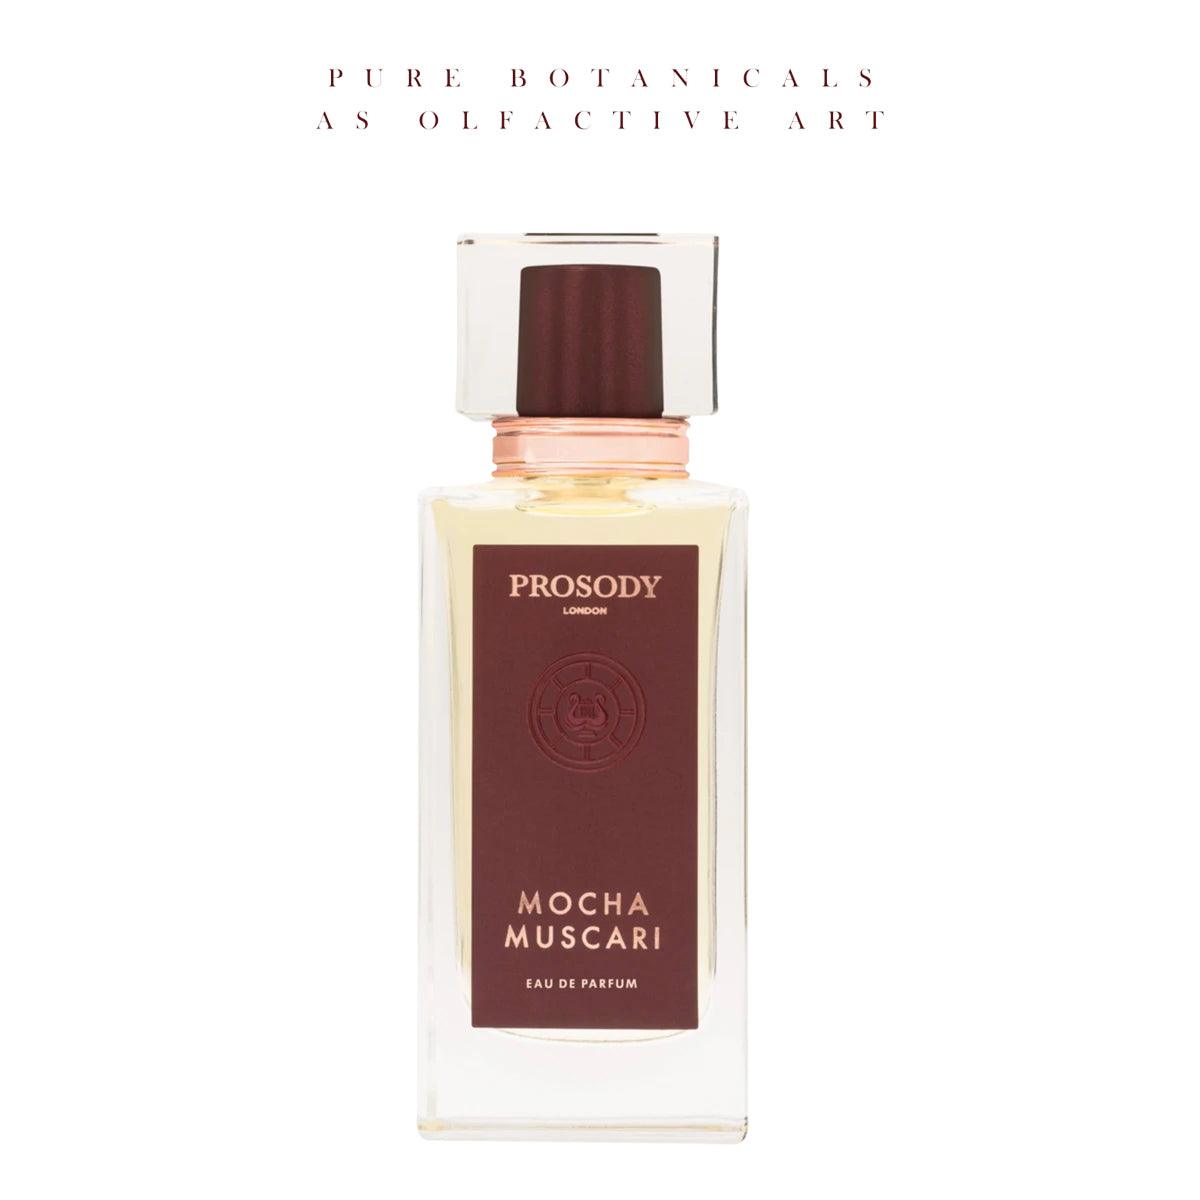 Mocha Muscari by Prosody London at Indigo Perfumery